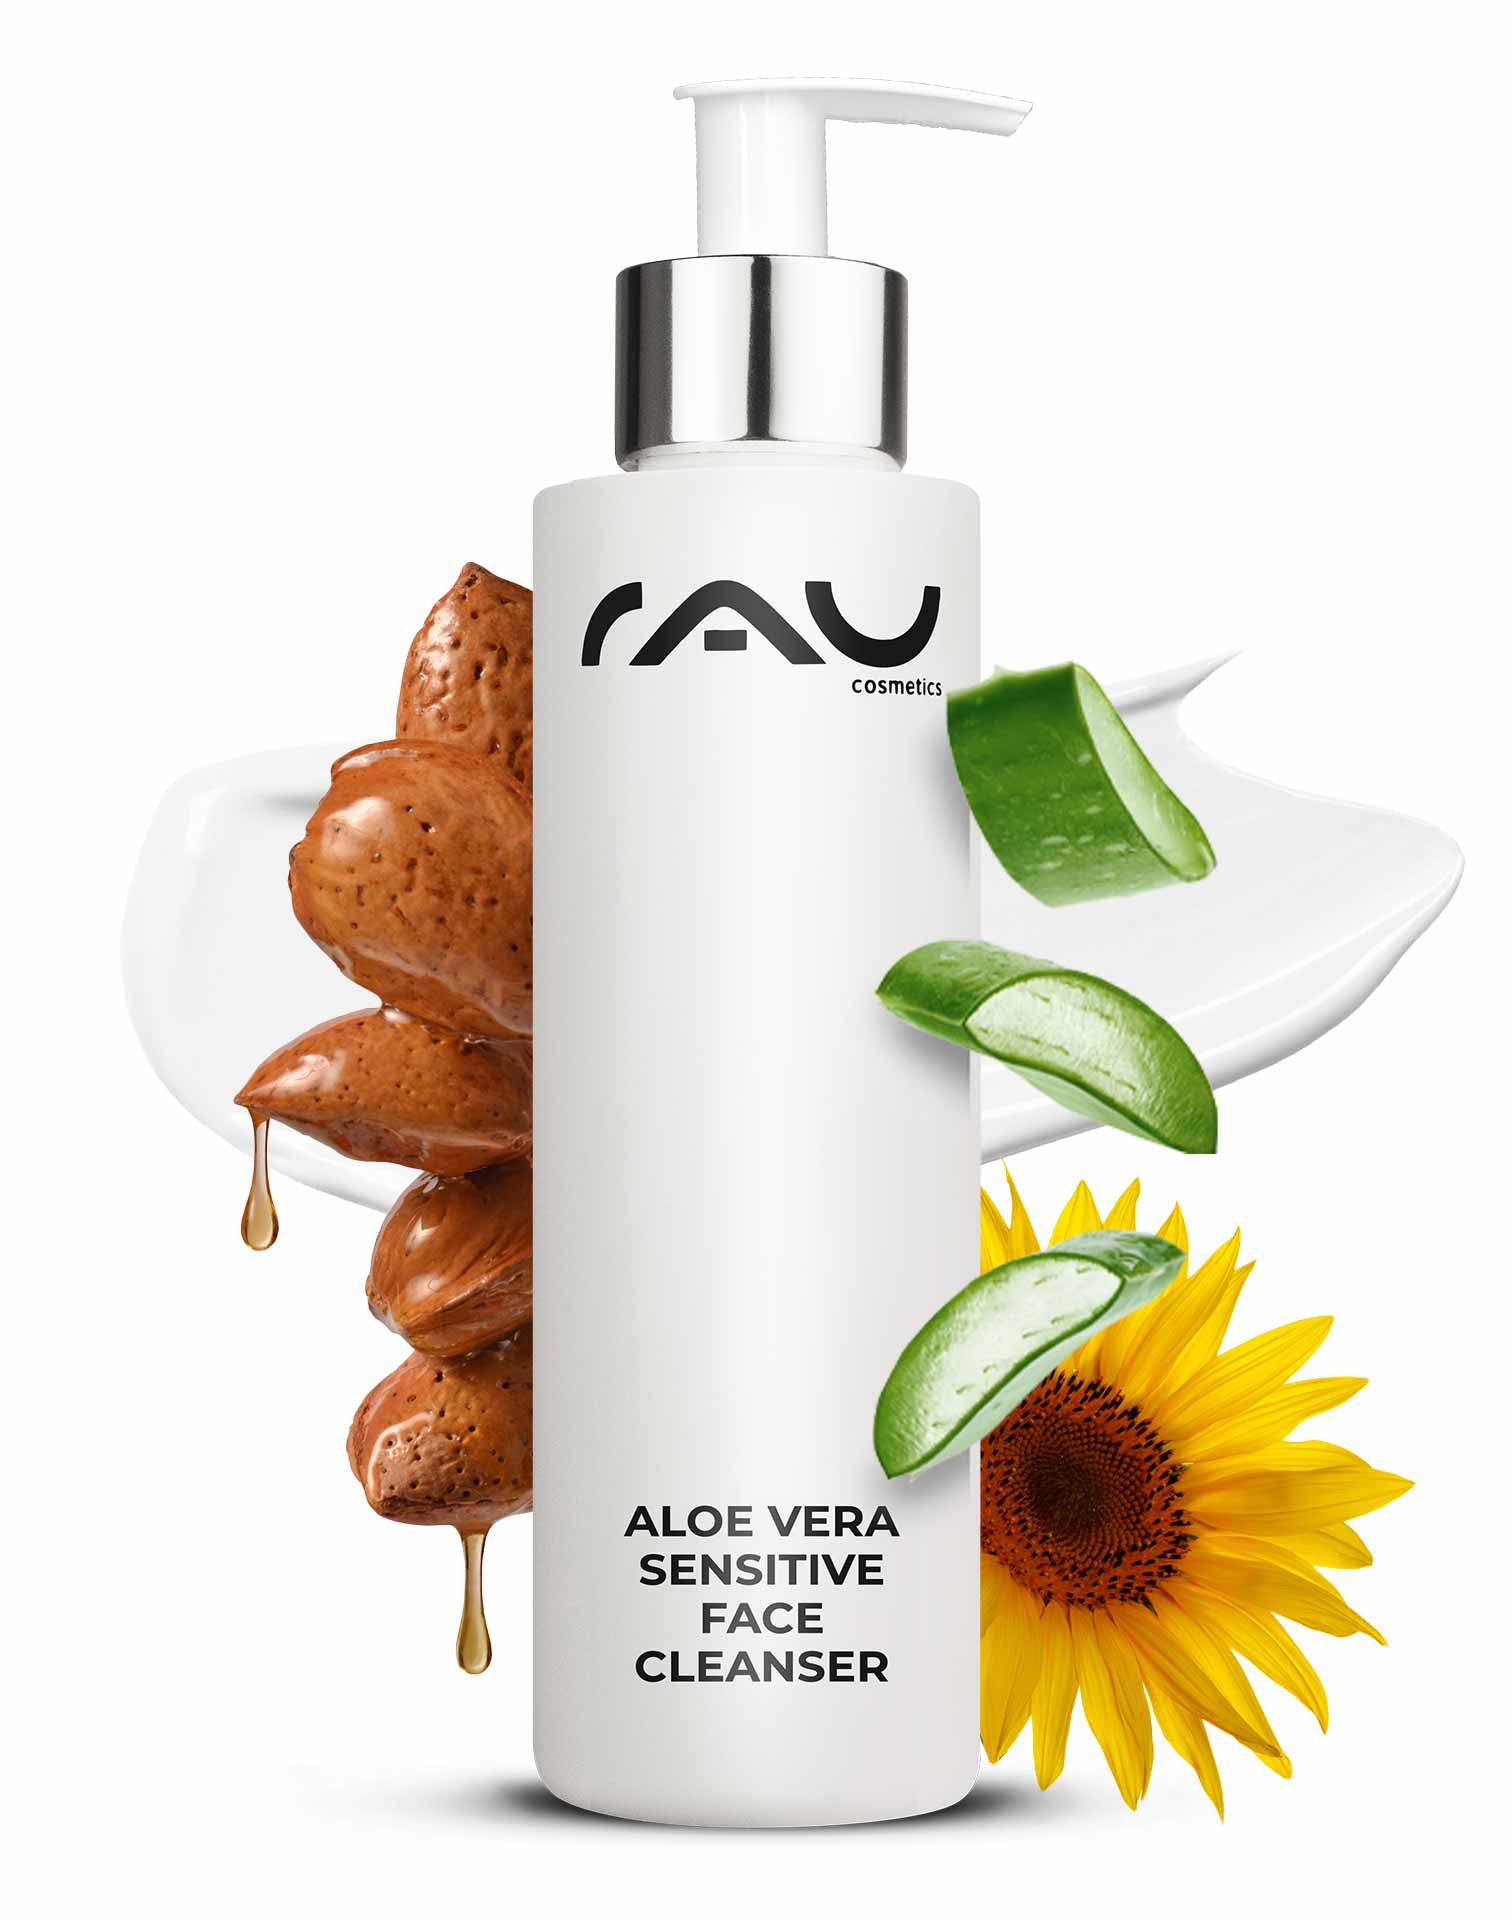 RAU Aloe Vera Sensitive Face Cleanser 200 ml - Vegan Cleanser for sensitive and dry skin